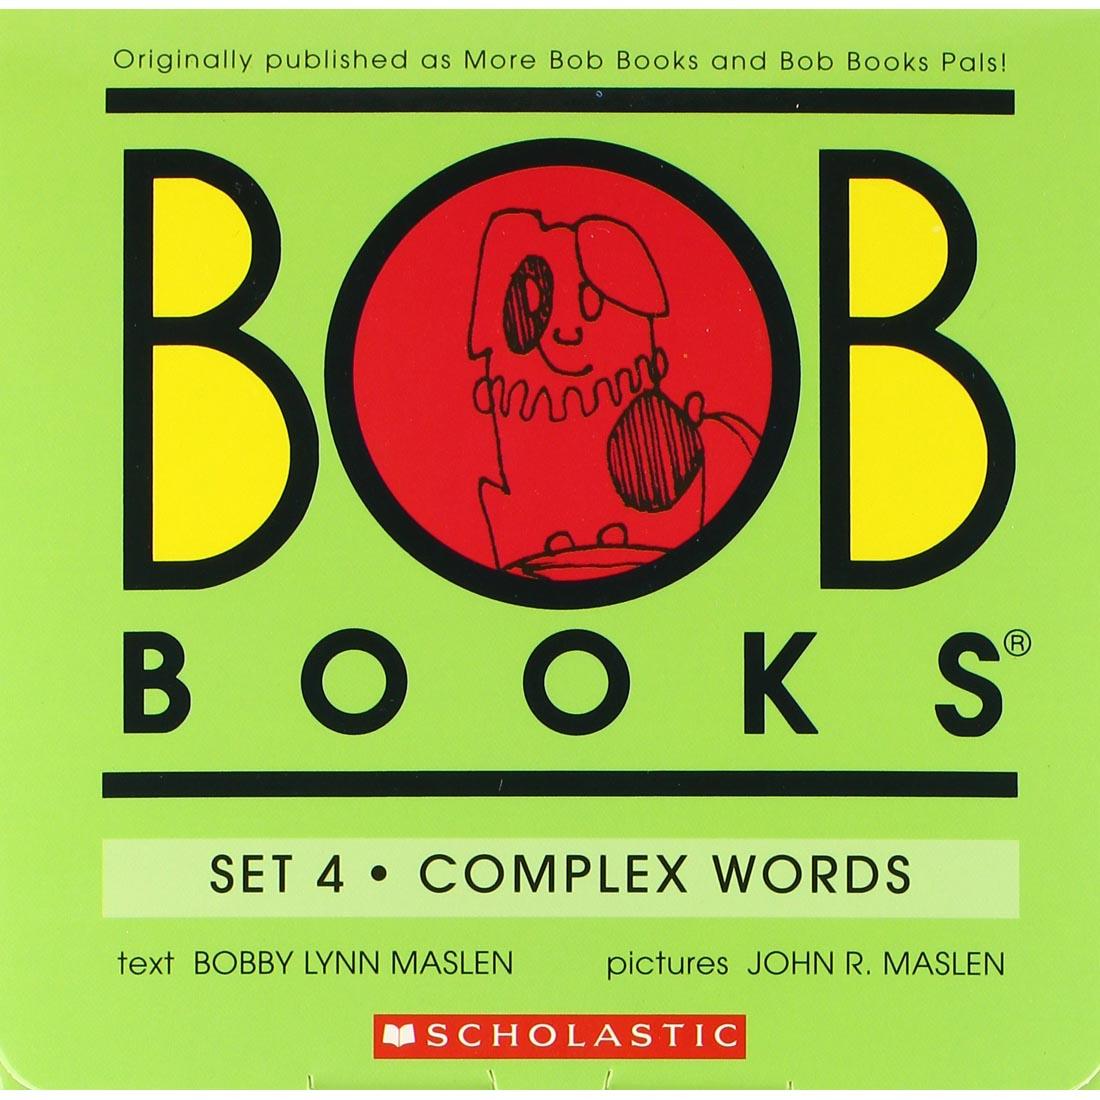 BOB Books by Scholastic Set 4: Complex Words